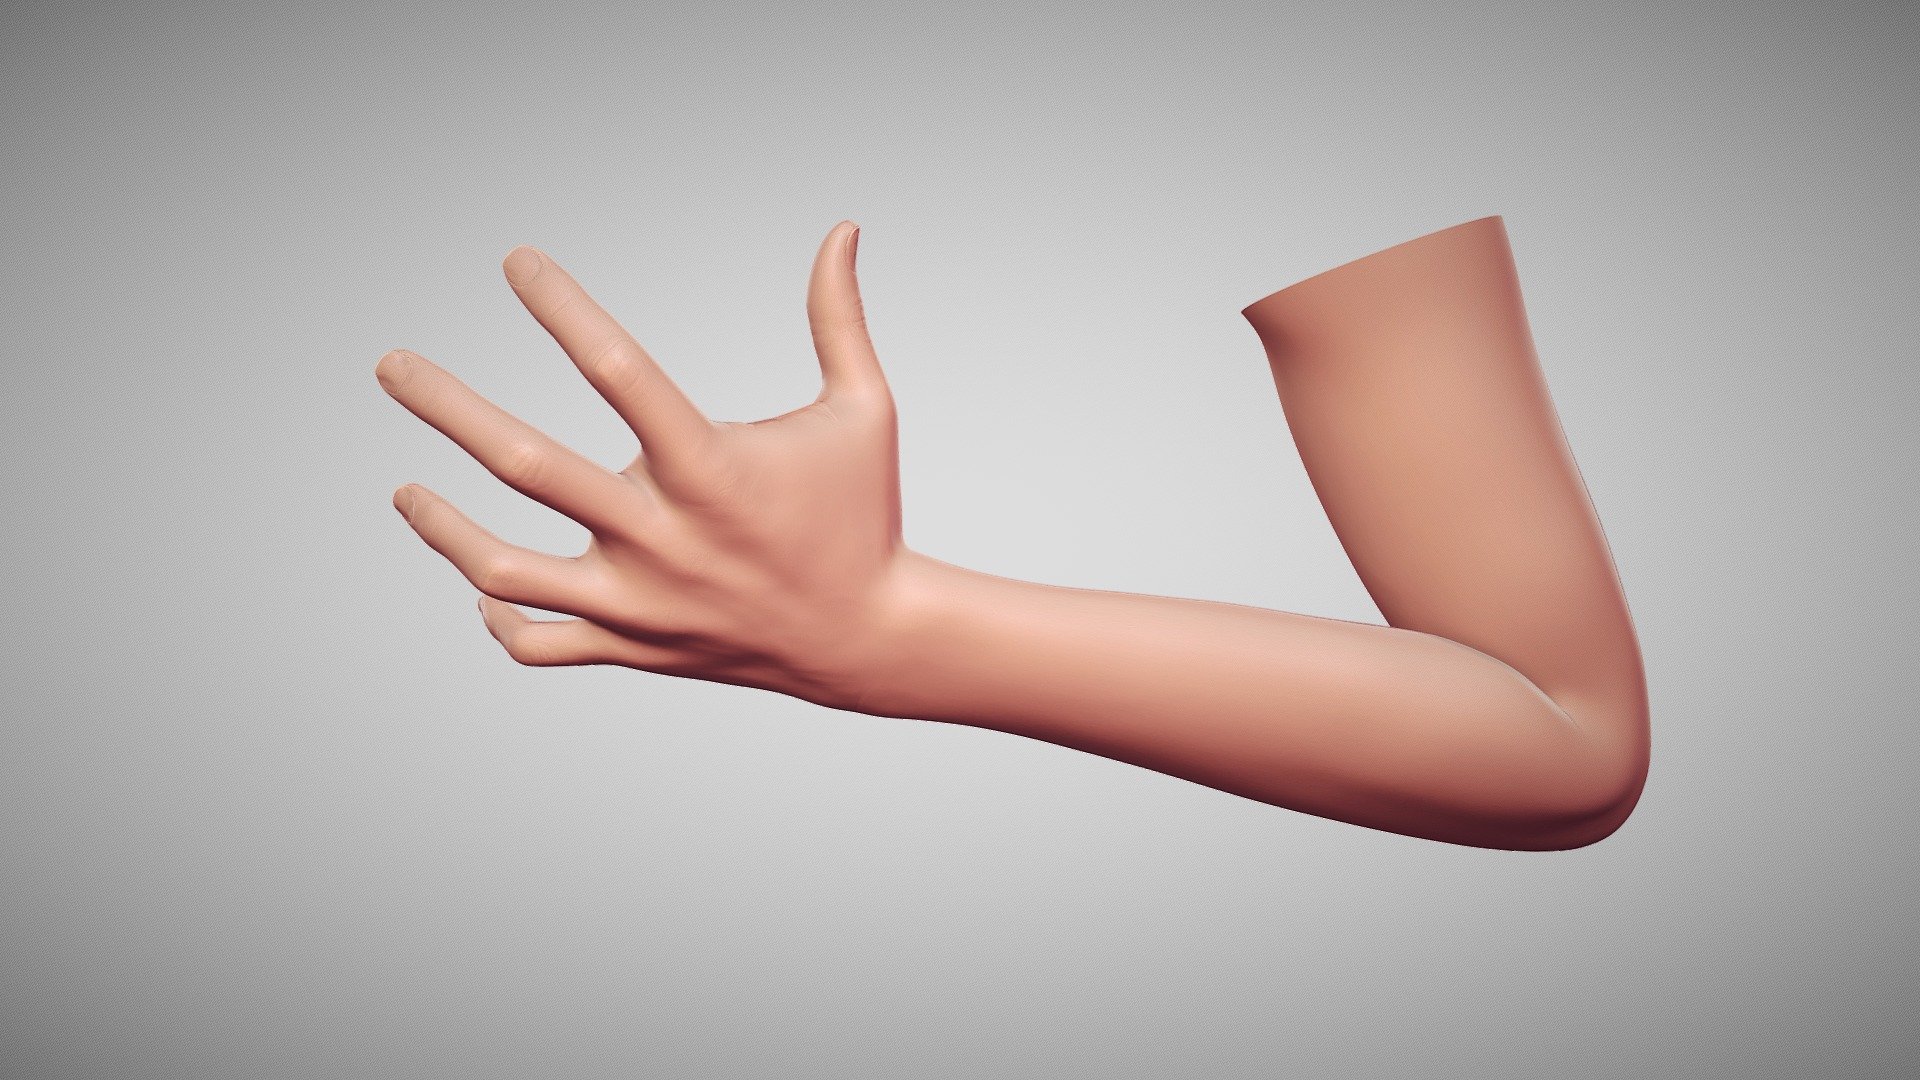 Here e 3. Женская рука 3д модель. Женская рука референс. Женская рука локоть референс. Референсы руки полностью женские.